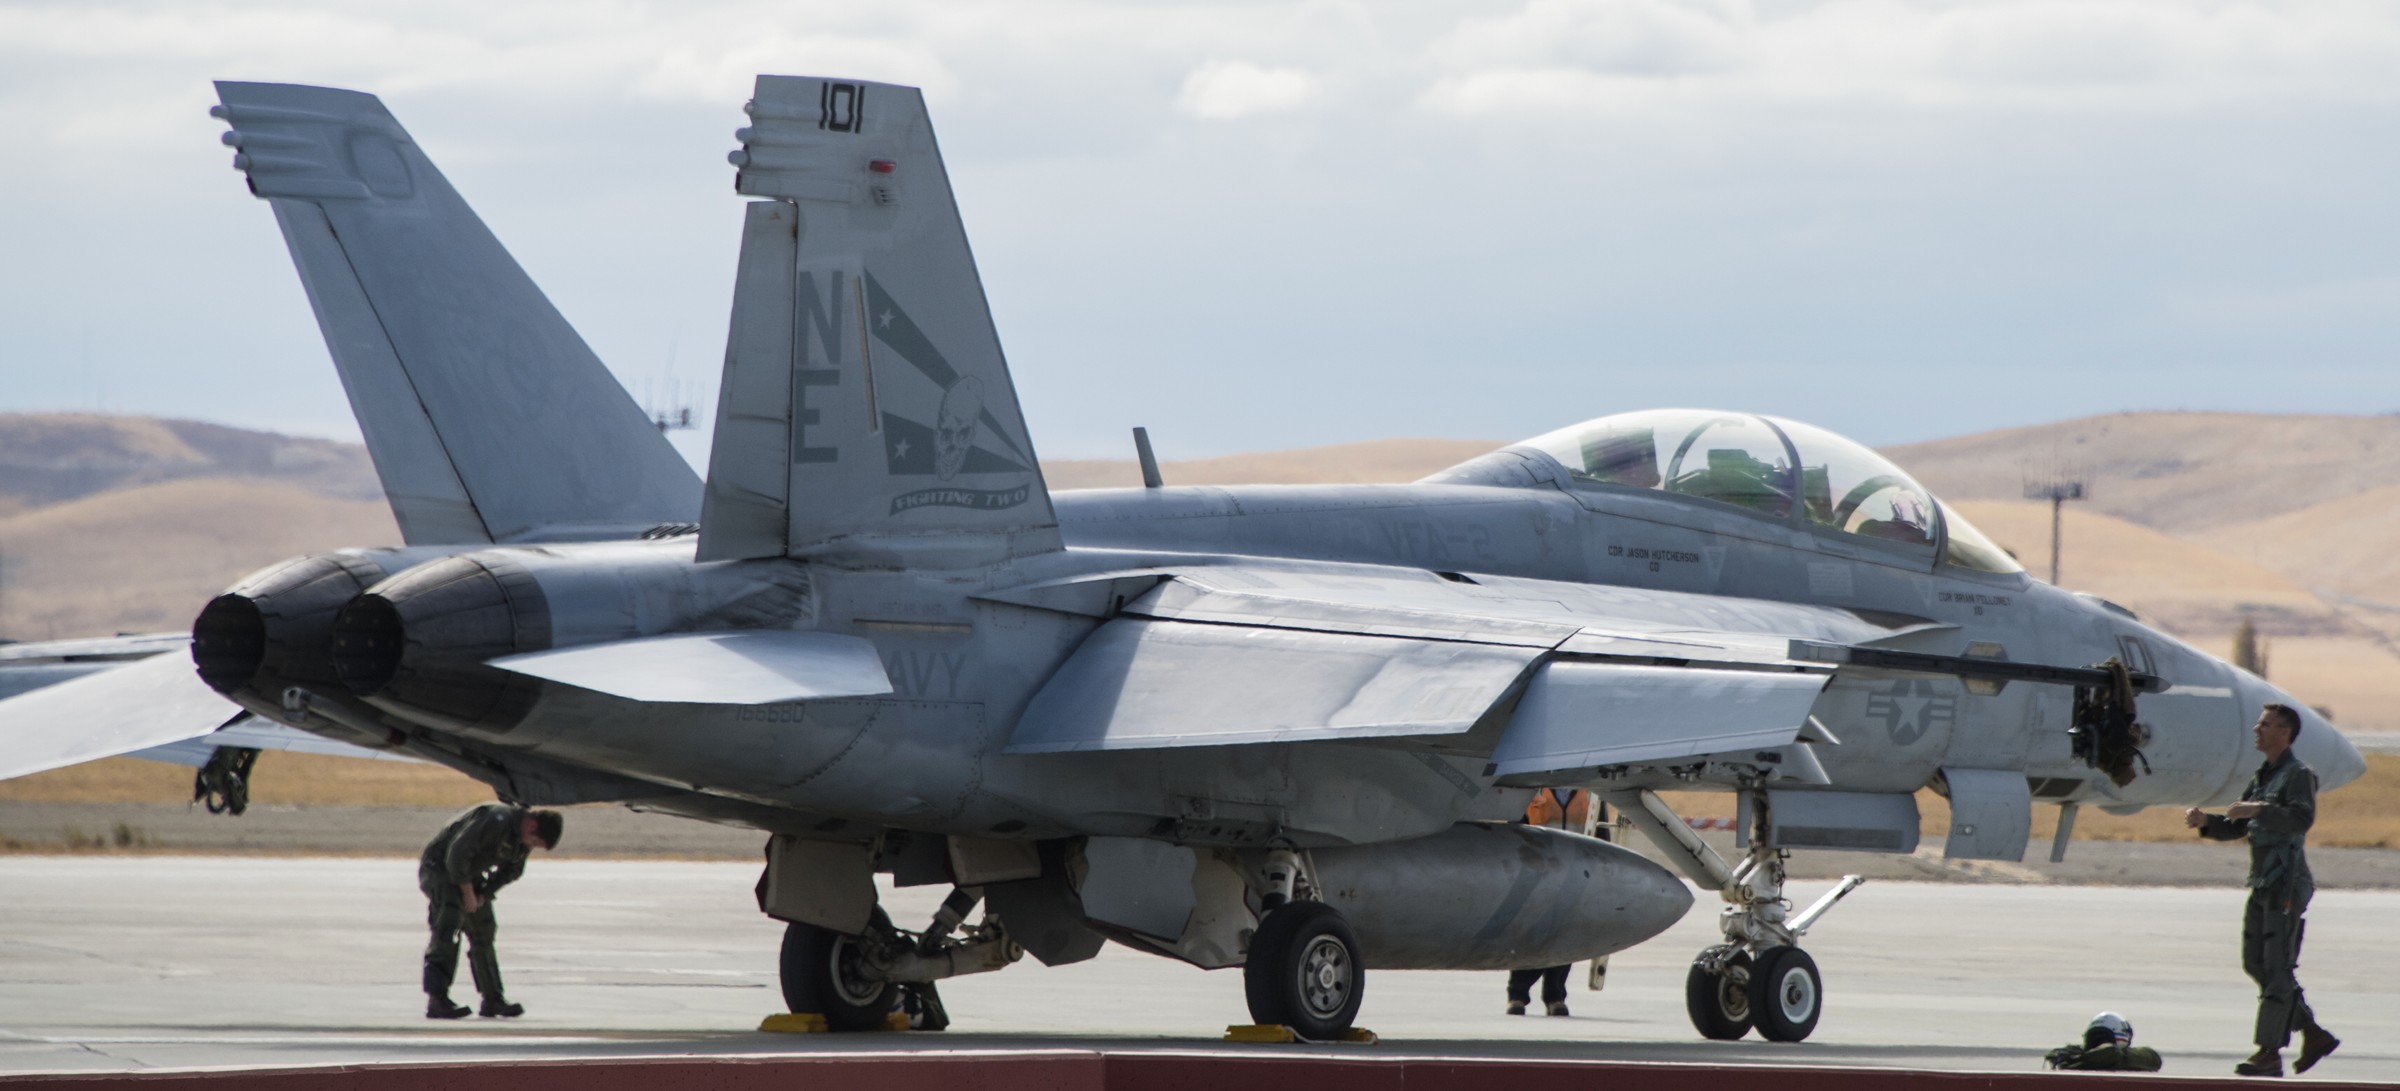 vfa-2 bounty hunters strike fighter squadron us navy f/a-18f super hornet travis afb california 63